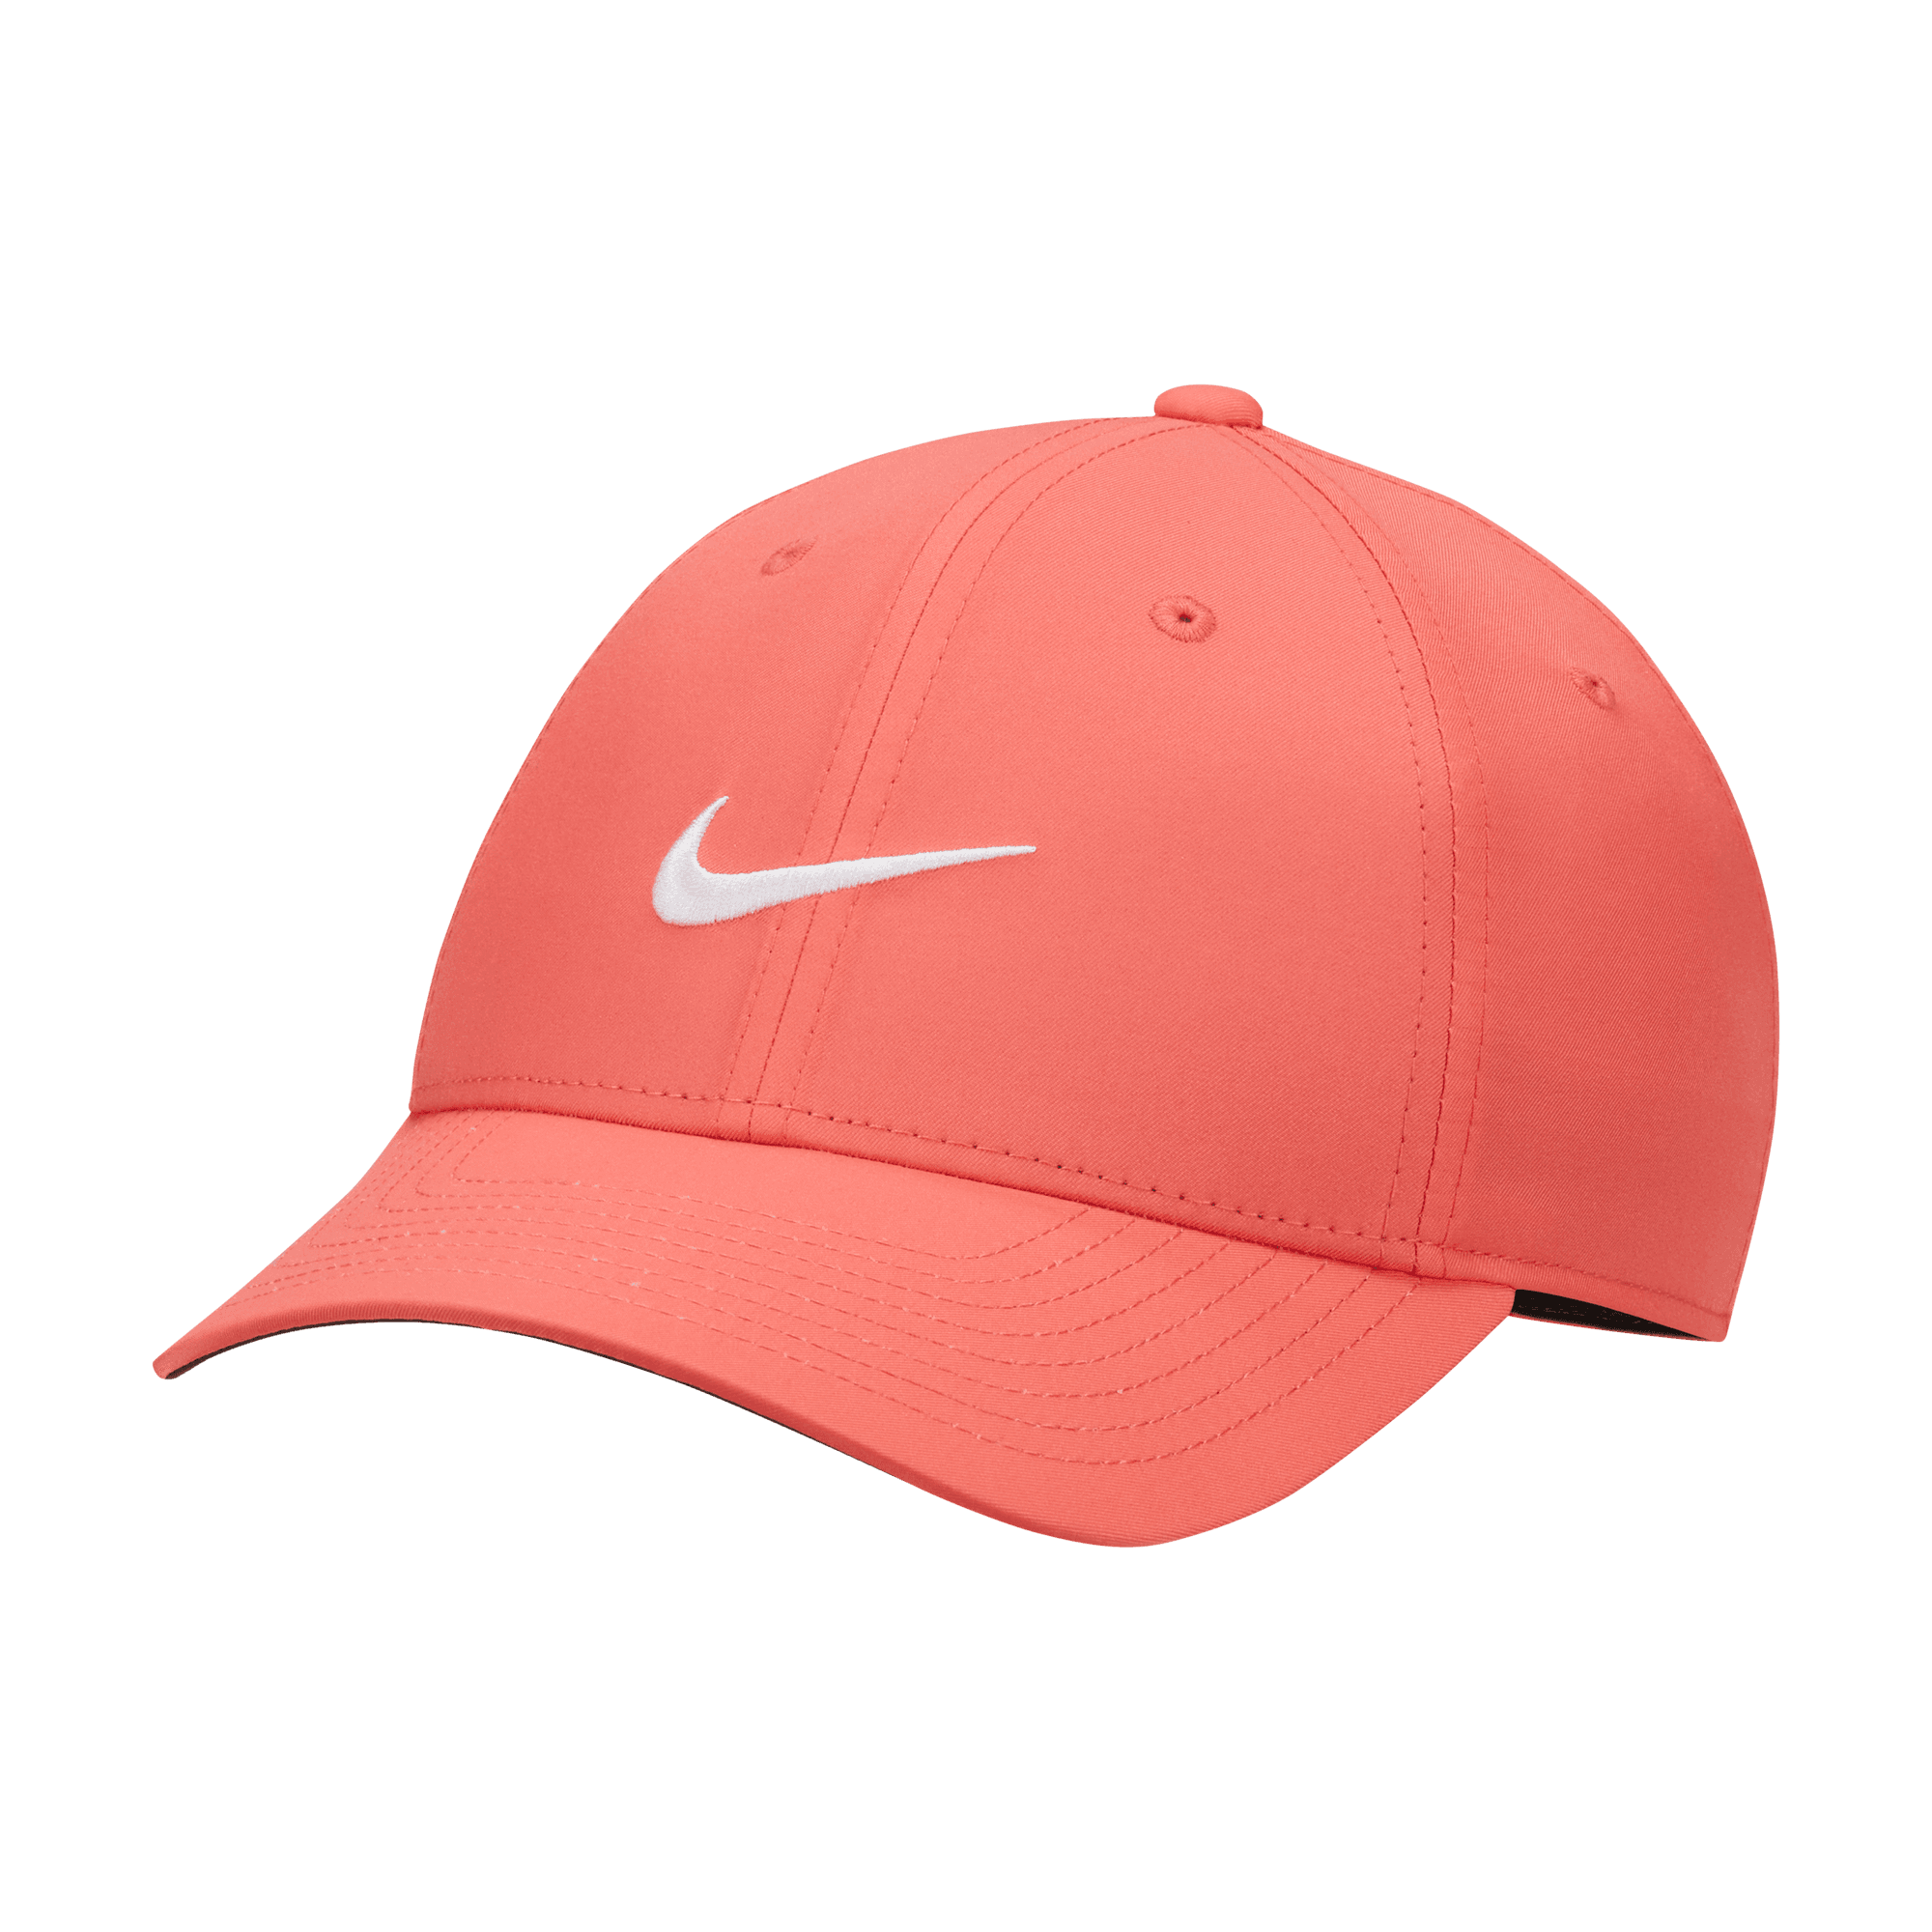 Nike Dri-FIT Legacy91 Adjustable Baseball Cap